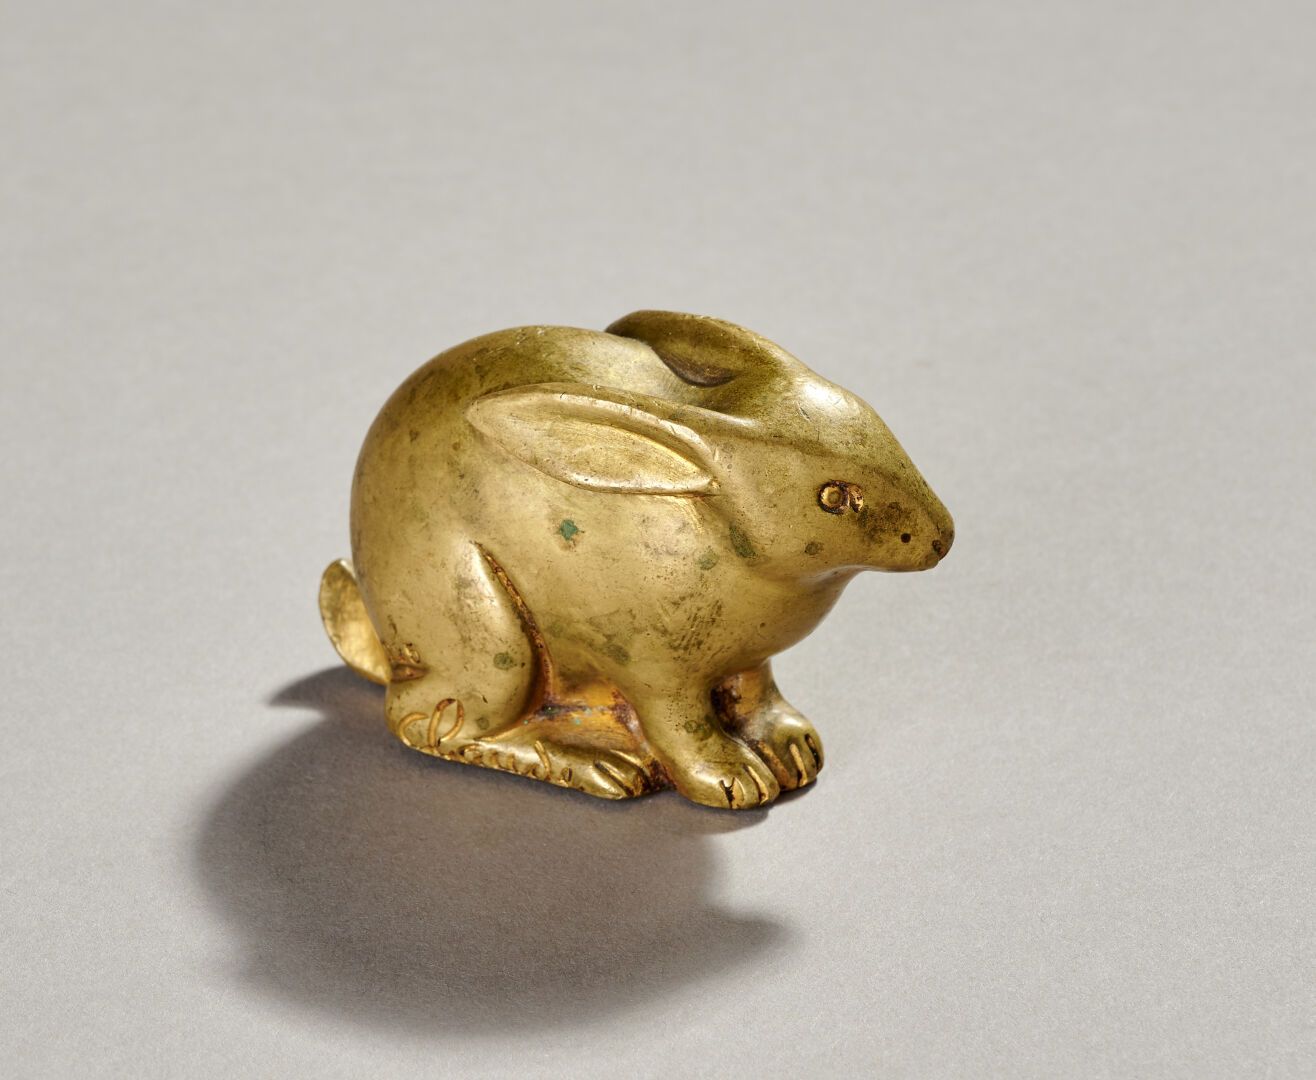 Null Marcel GUILLEMARD (1887-1966)

"Claude Rabbit".

Soggetto in bronzo con una&hellip;